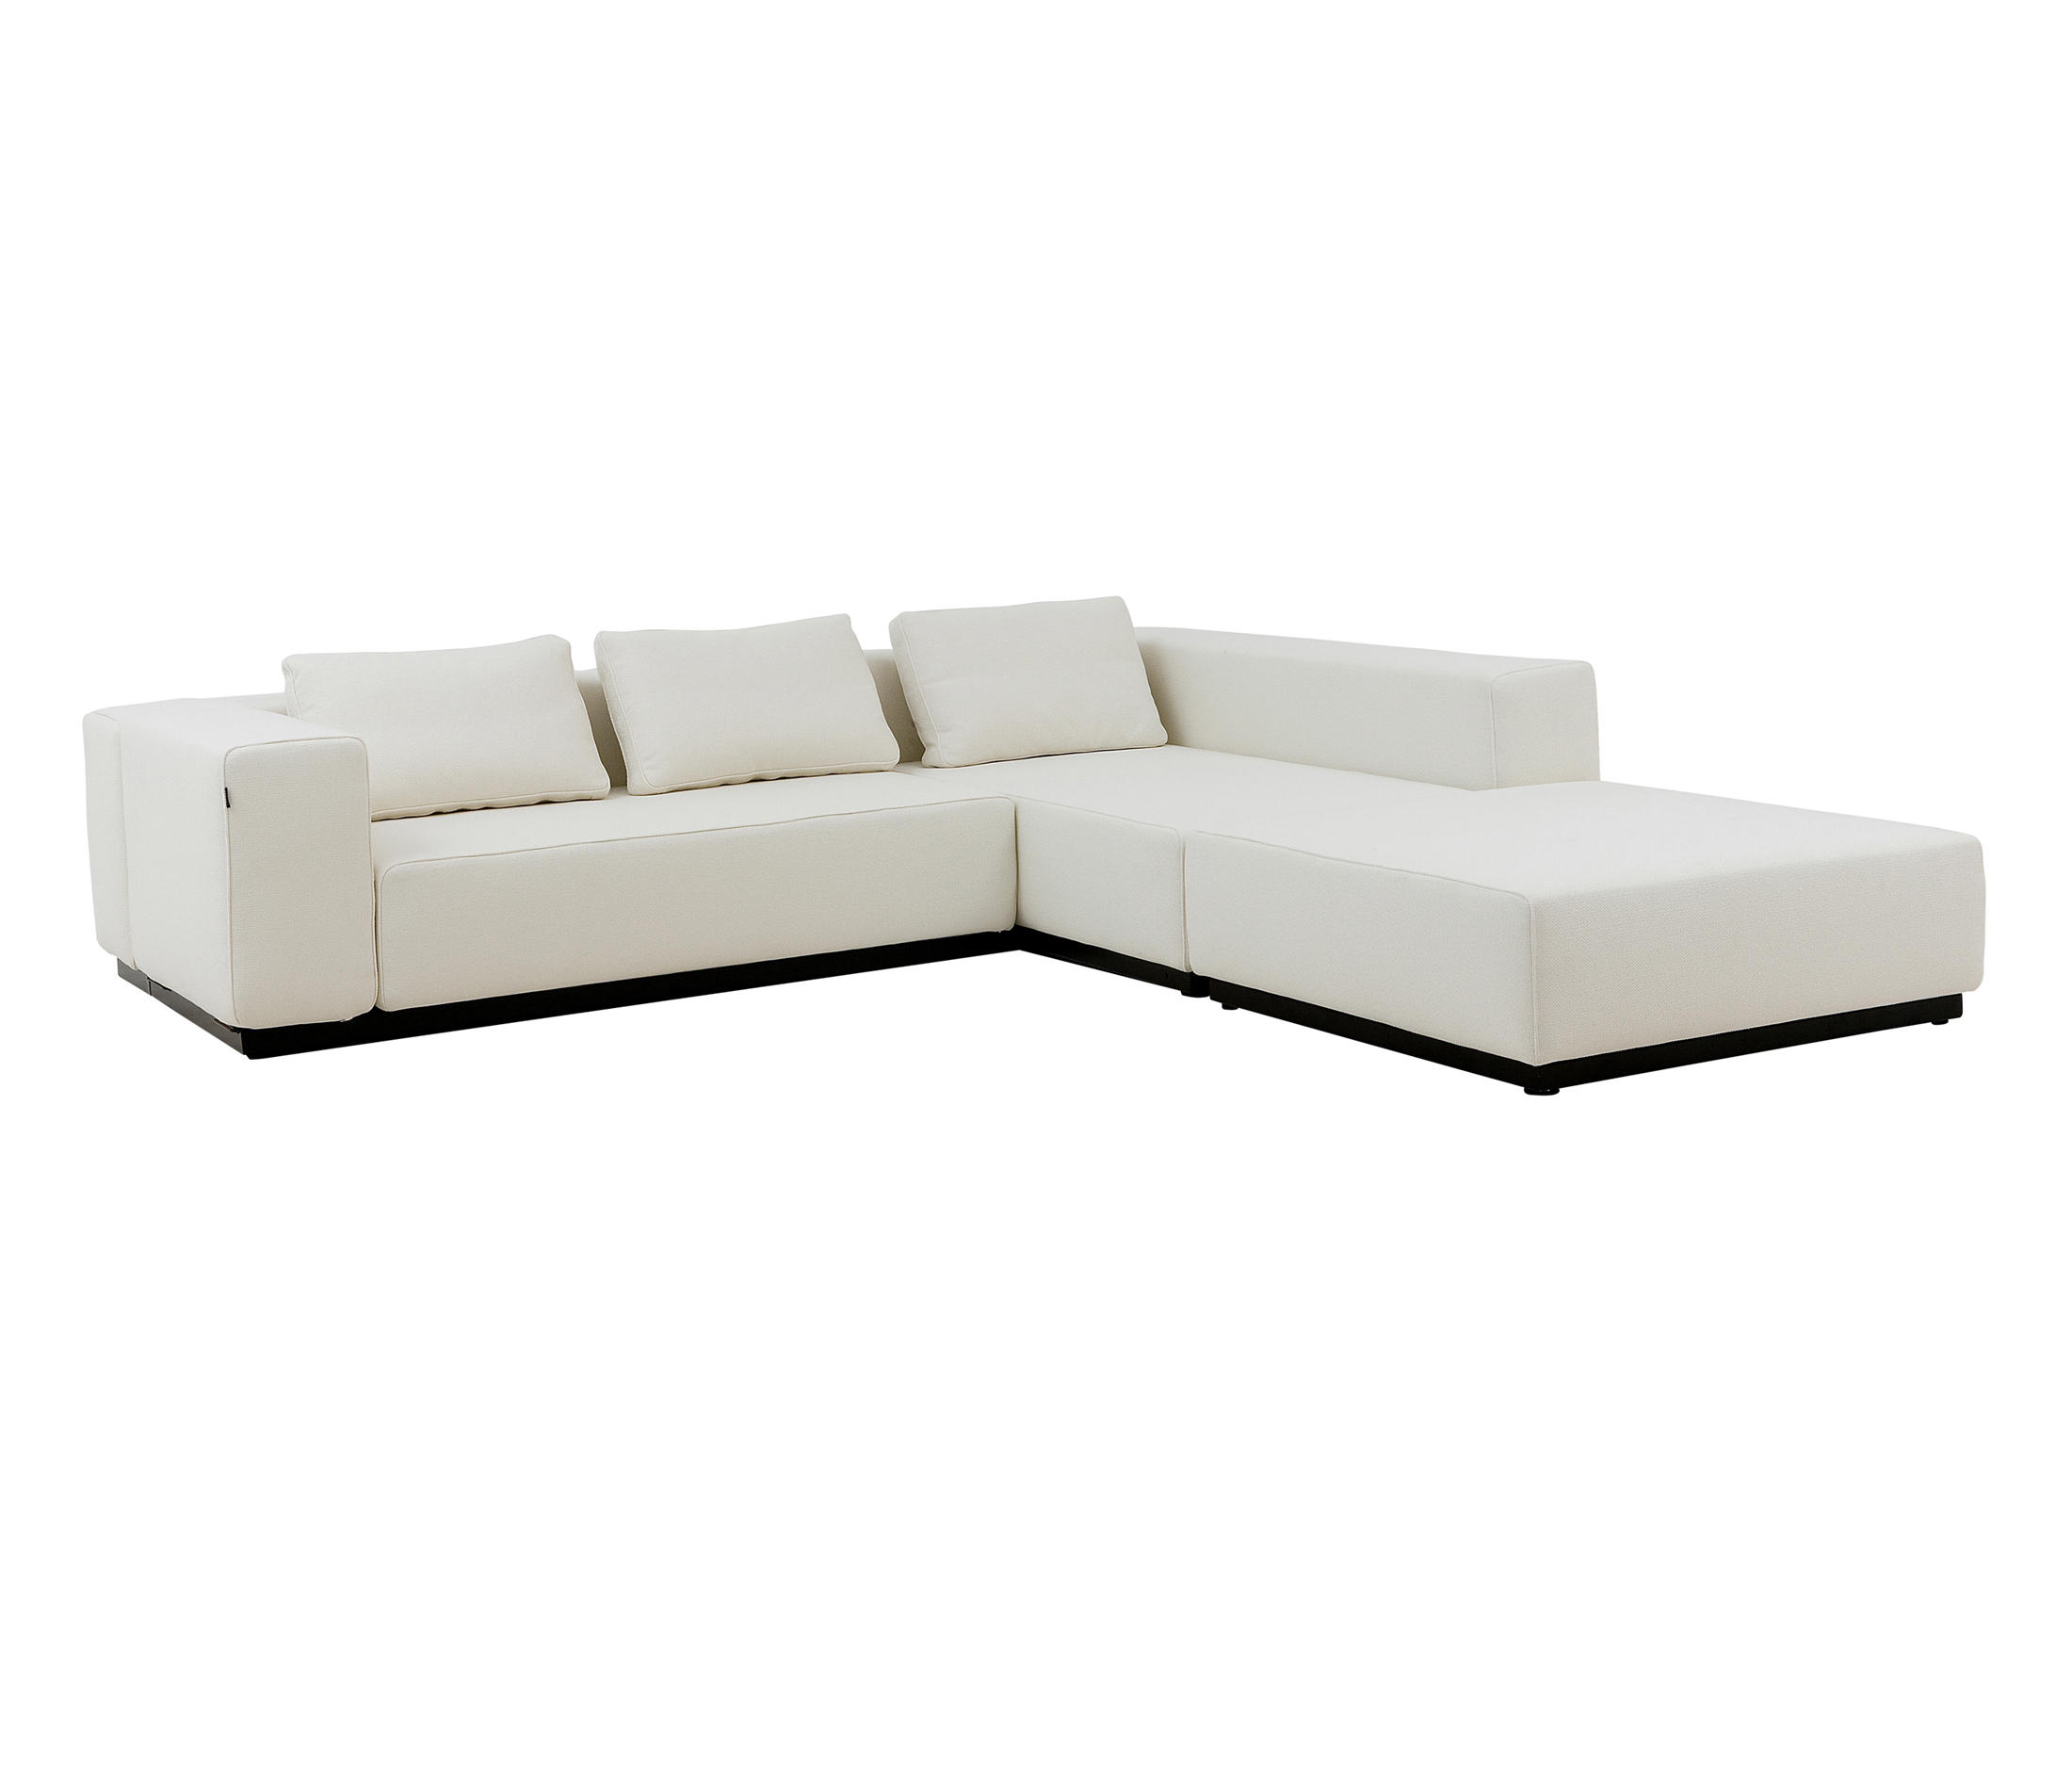 NEVADA SOFA Modular sofa systems from Softline A S